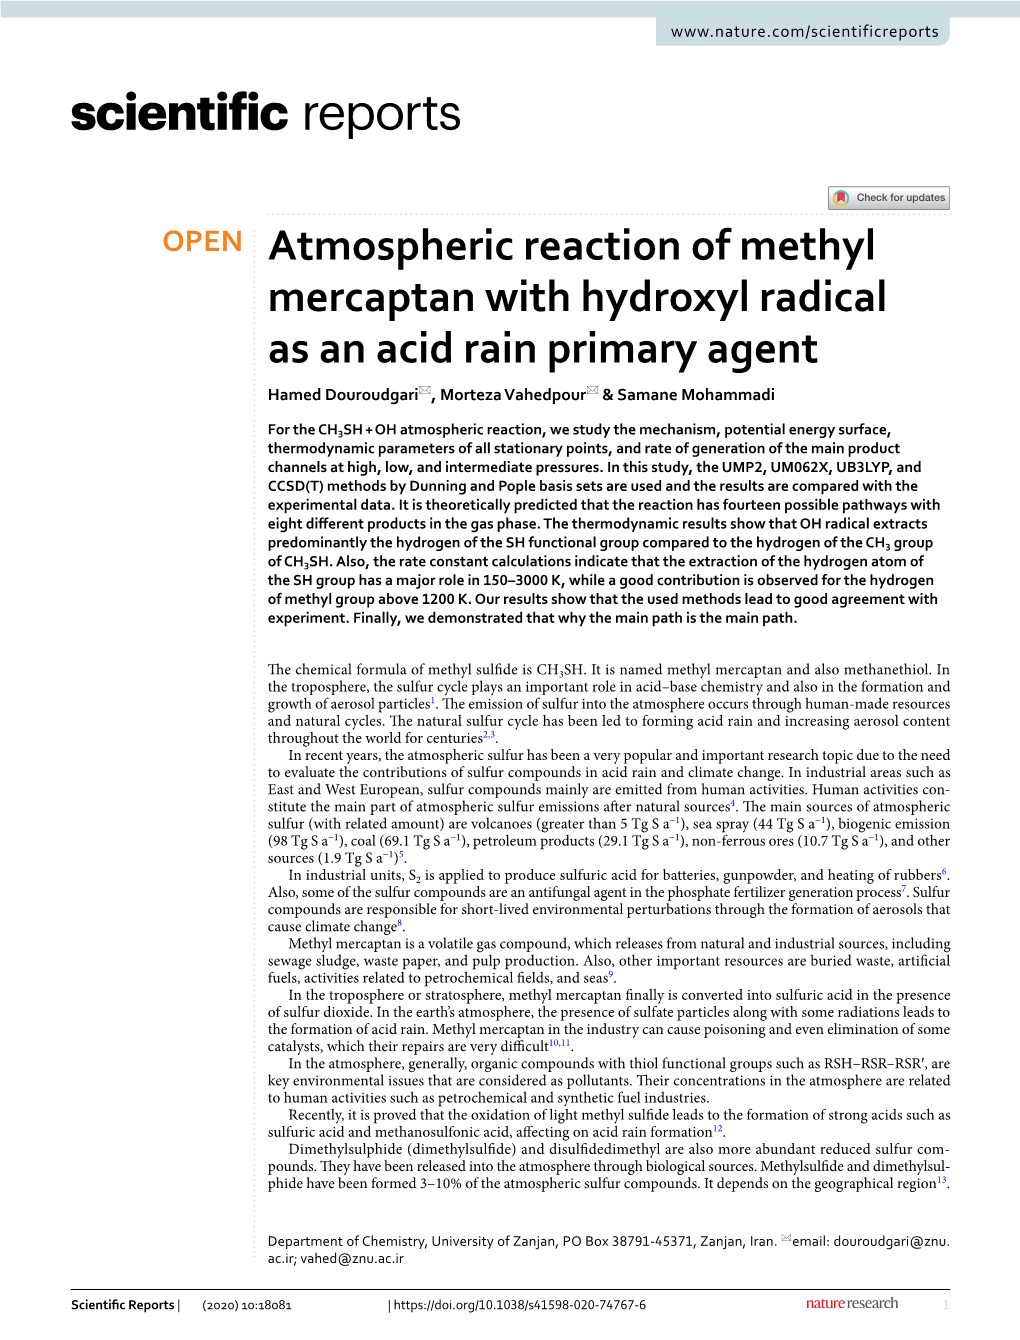 Atmospheric Reaction of Methyl Mercaptan with Hydroxyl Radical As an Acid Rain Primary Agent Hamed Douroudgari*, Morteza Vahedpour* & Samane Mohammadi